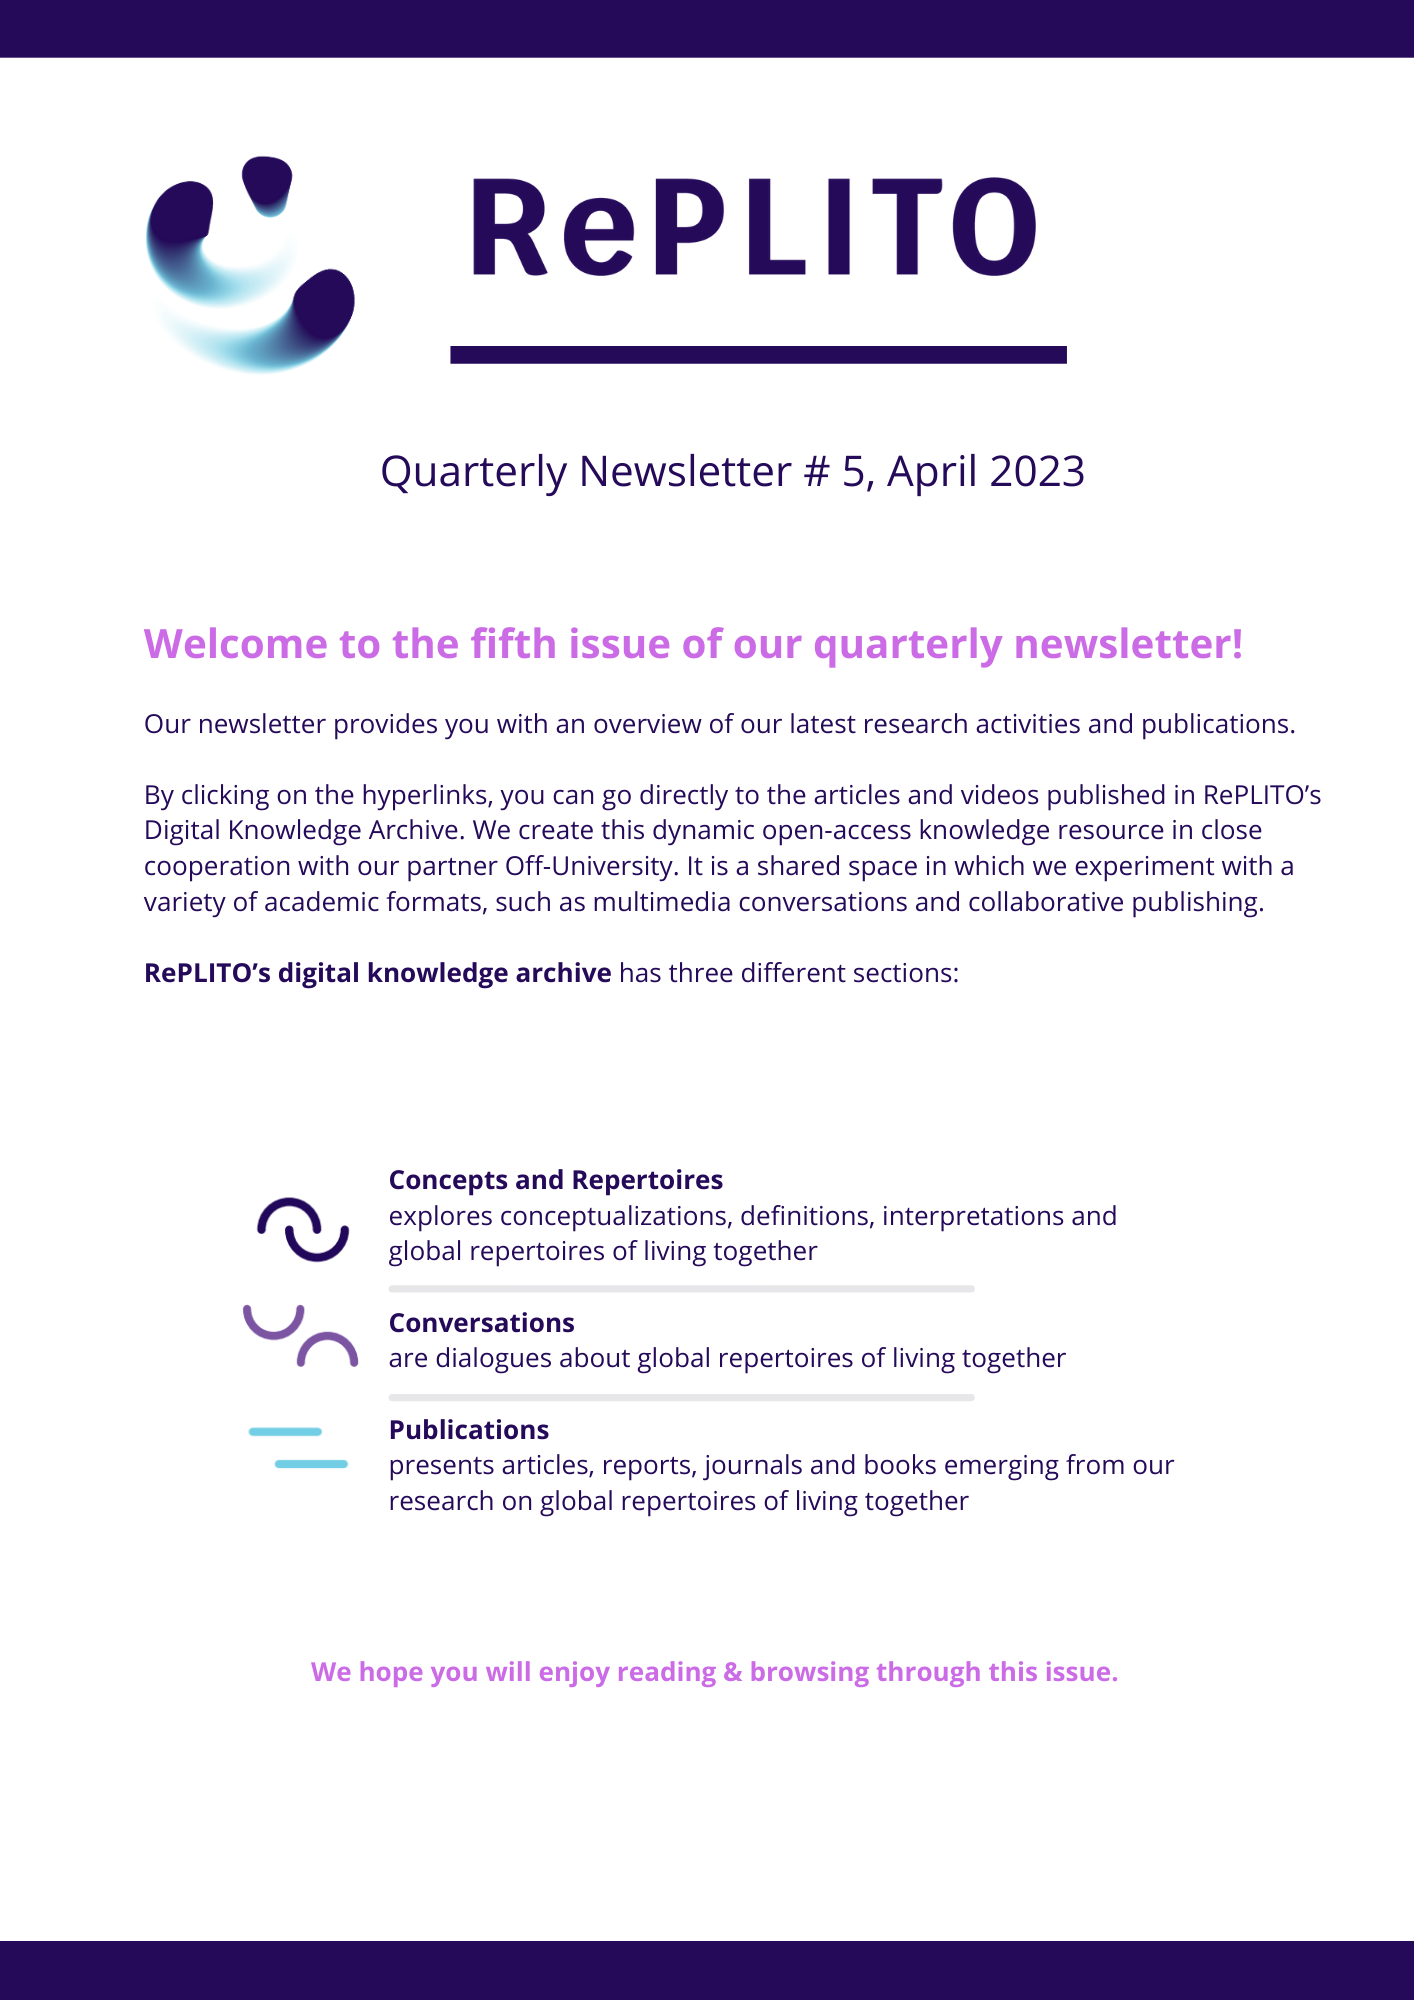 RePLITO Quarterly Newsletter #5 April 2023.png